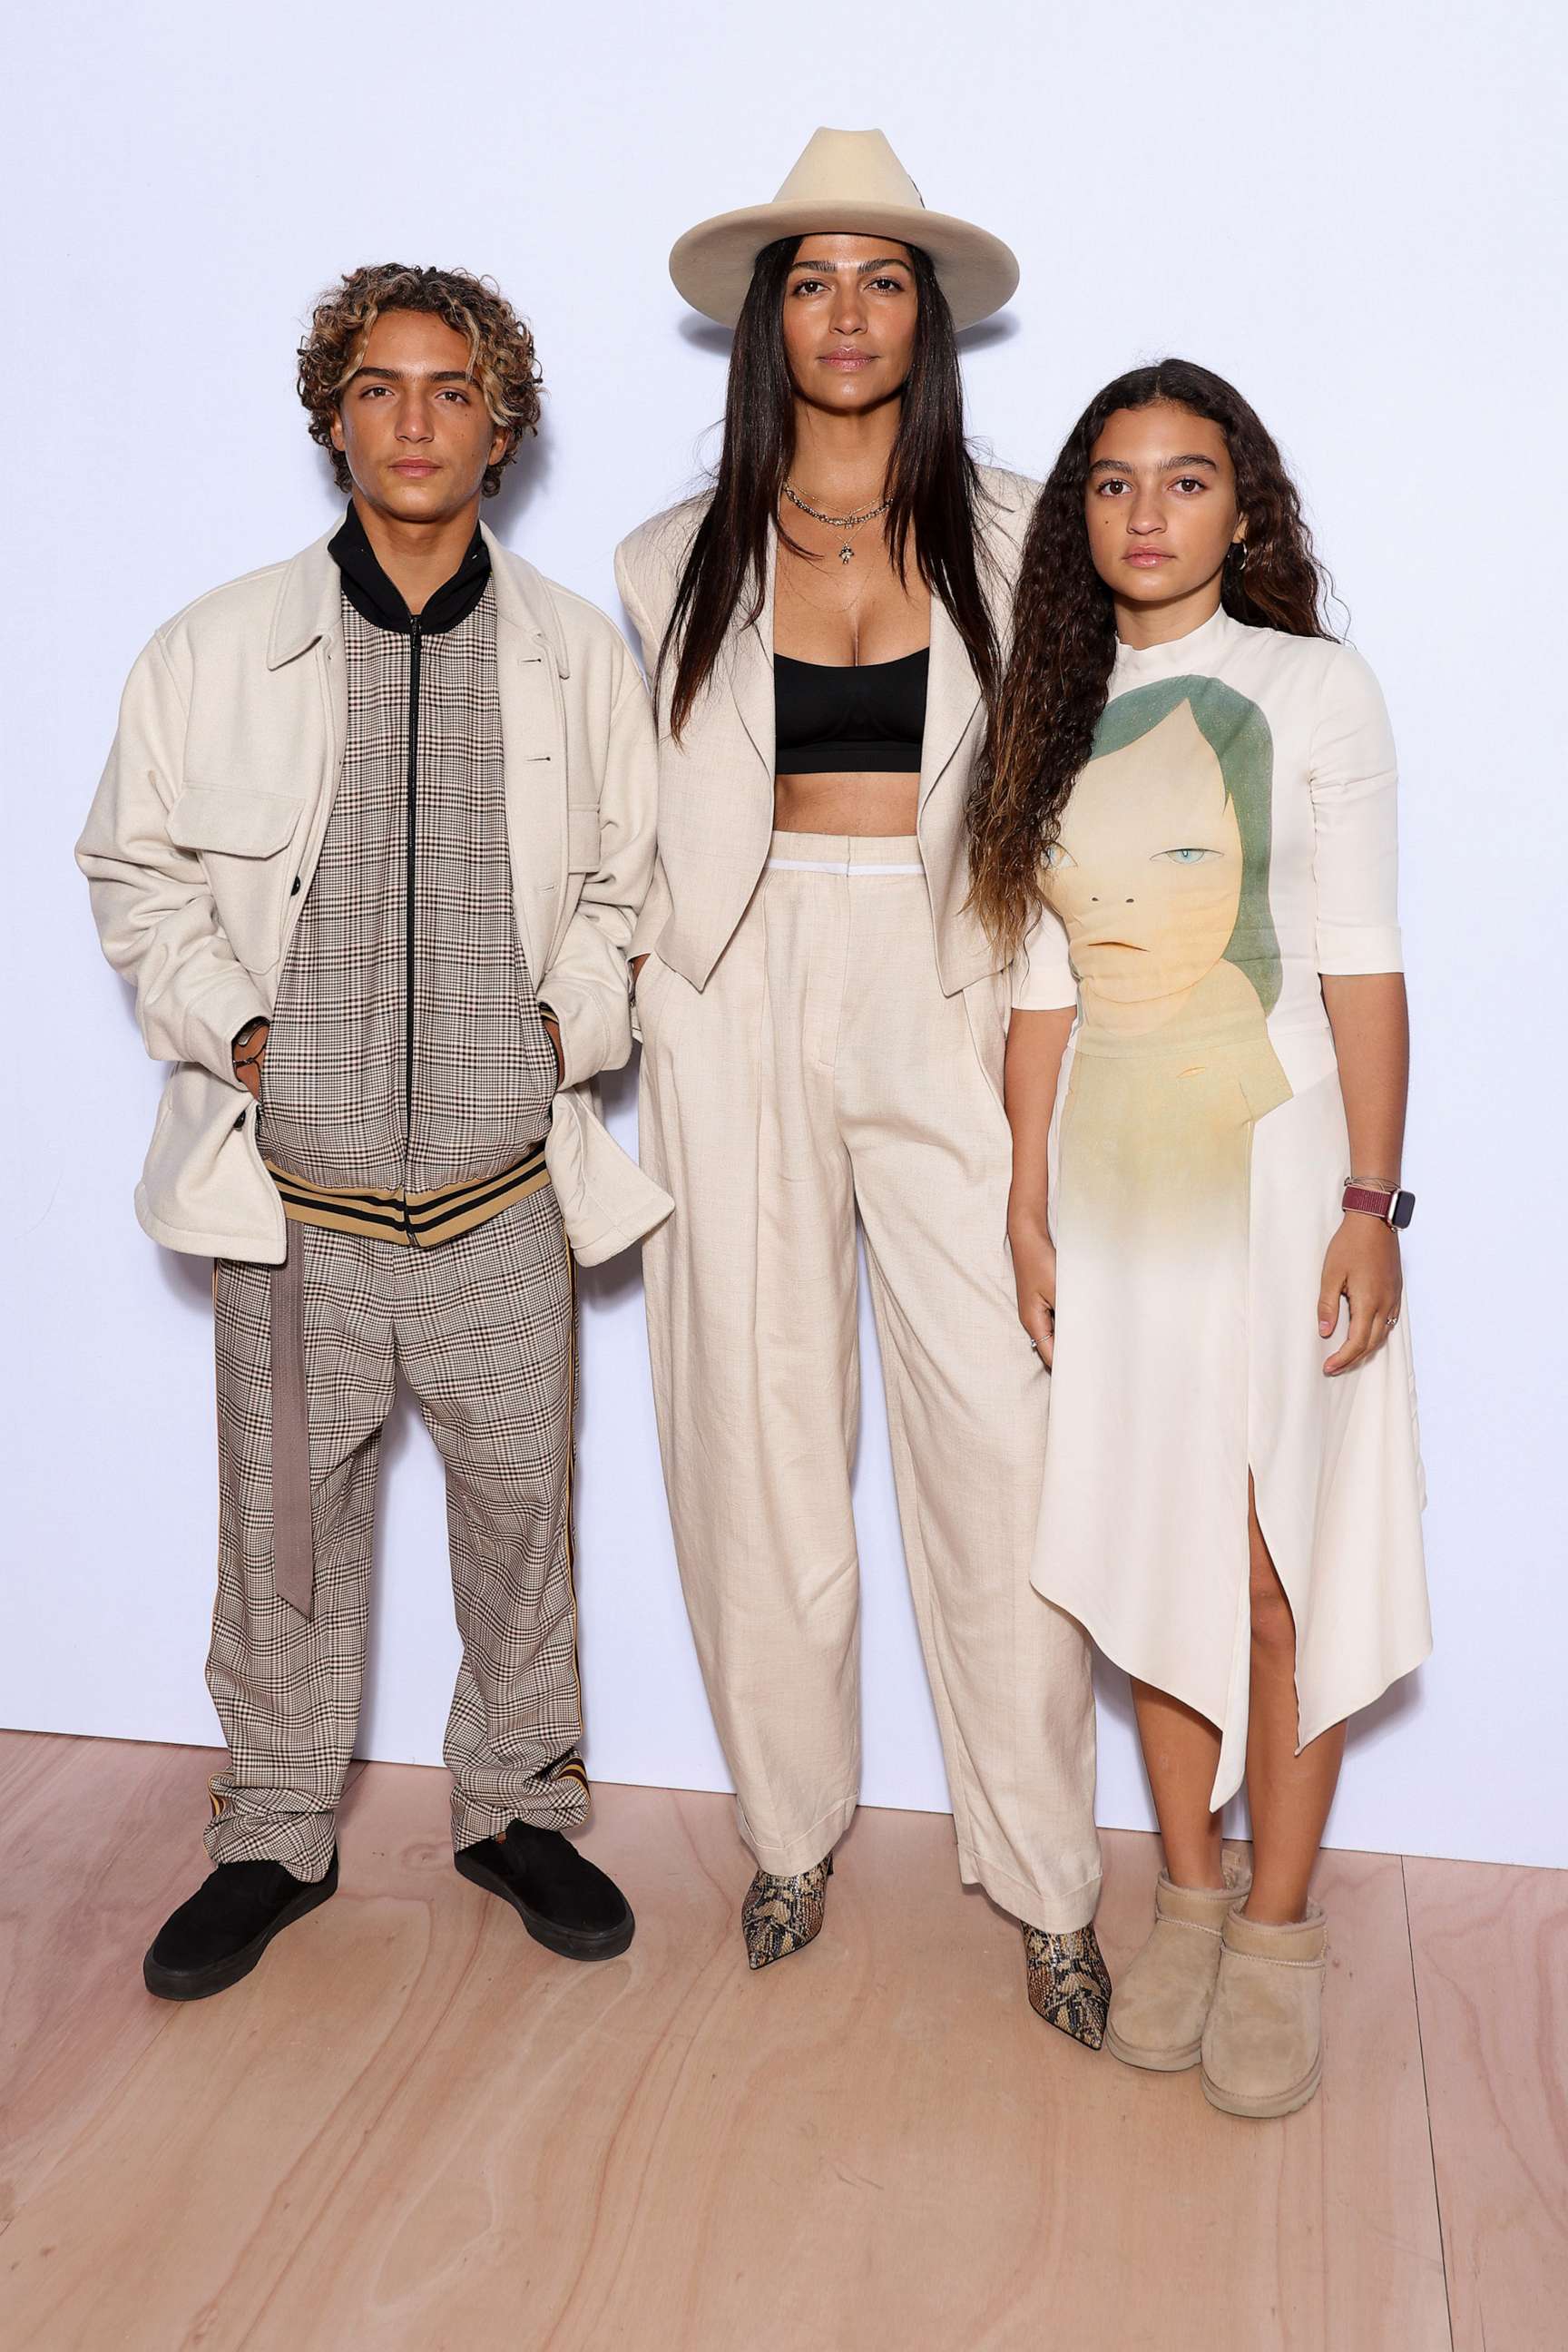 Camila Alves McConaughey color coordinates with kids Levi and Vida ...